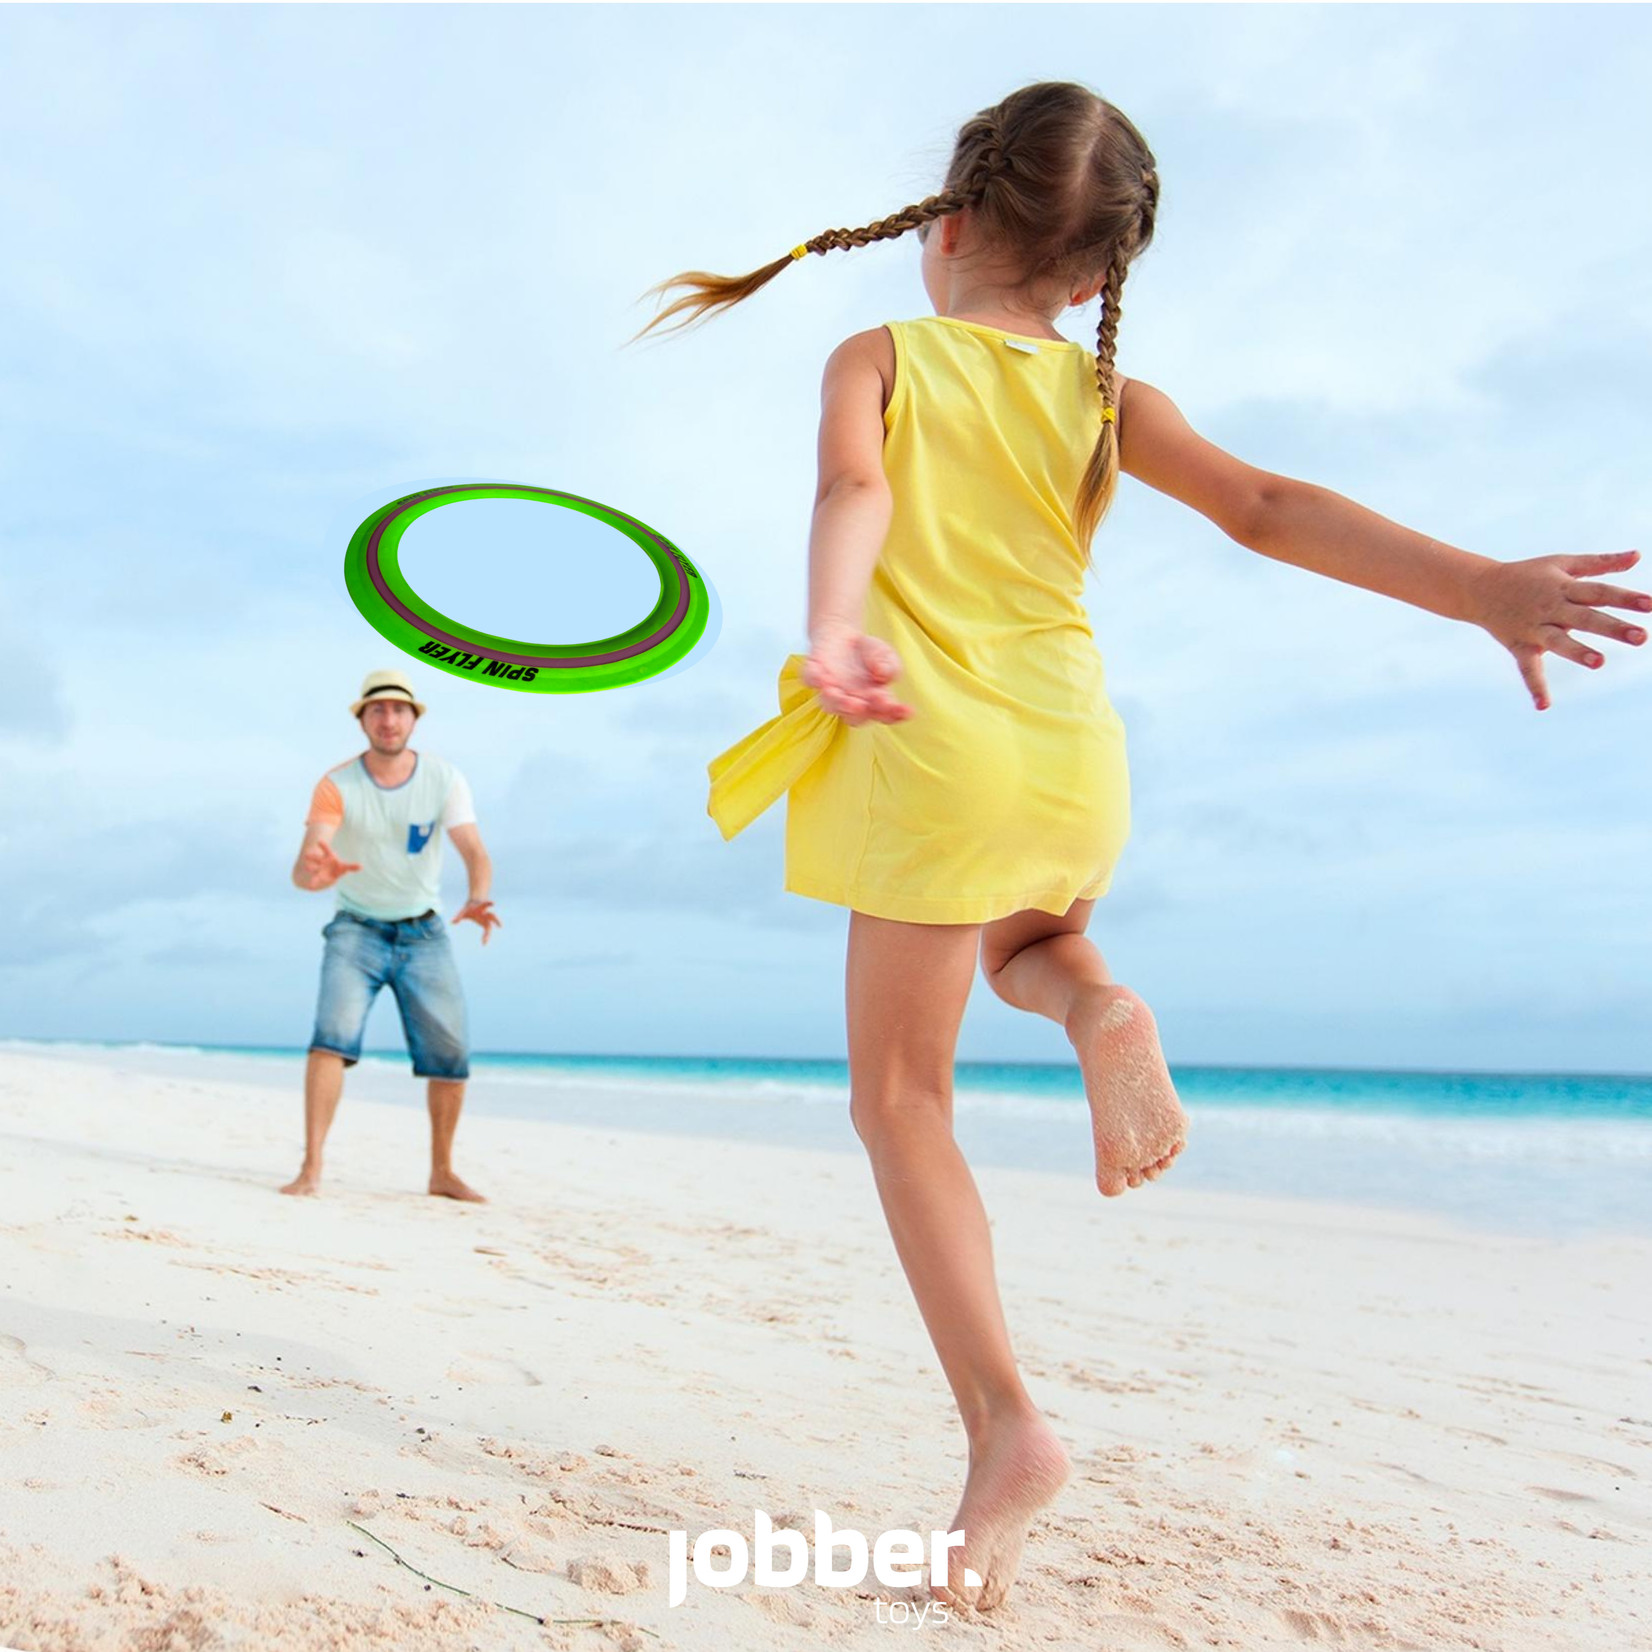 Jobber Playground Jobber Playground – Frisbee aerodisc Spin Flyer 2.0